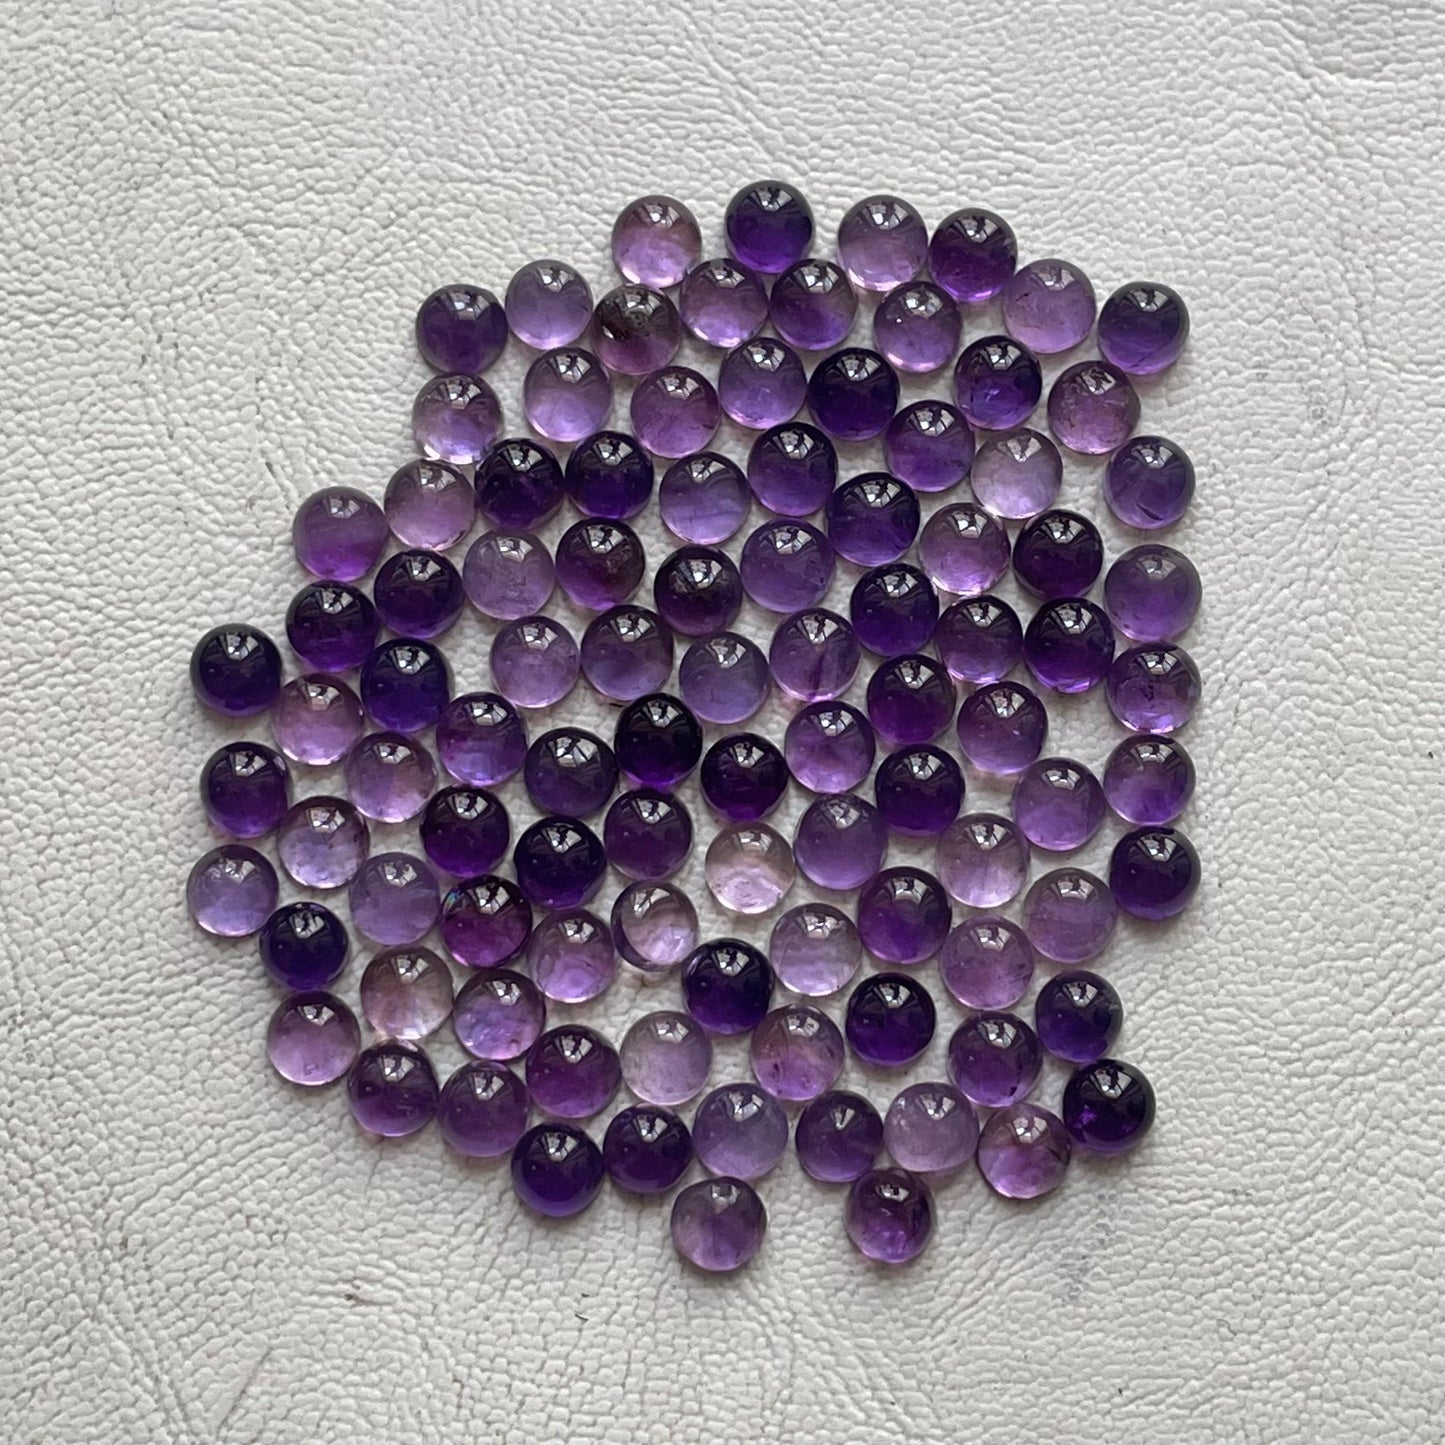 Beautiful Purple Amethyst 5 mm Round Cabochon (Natural)